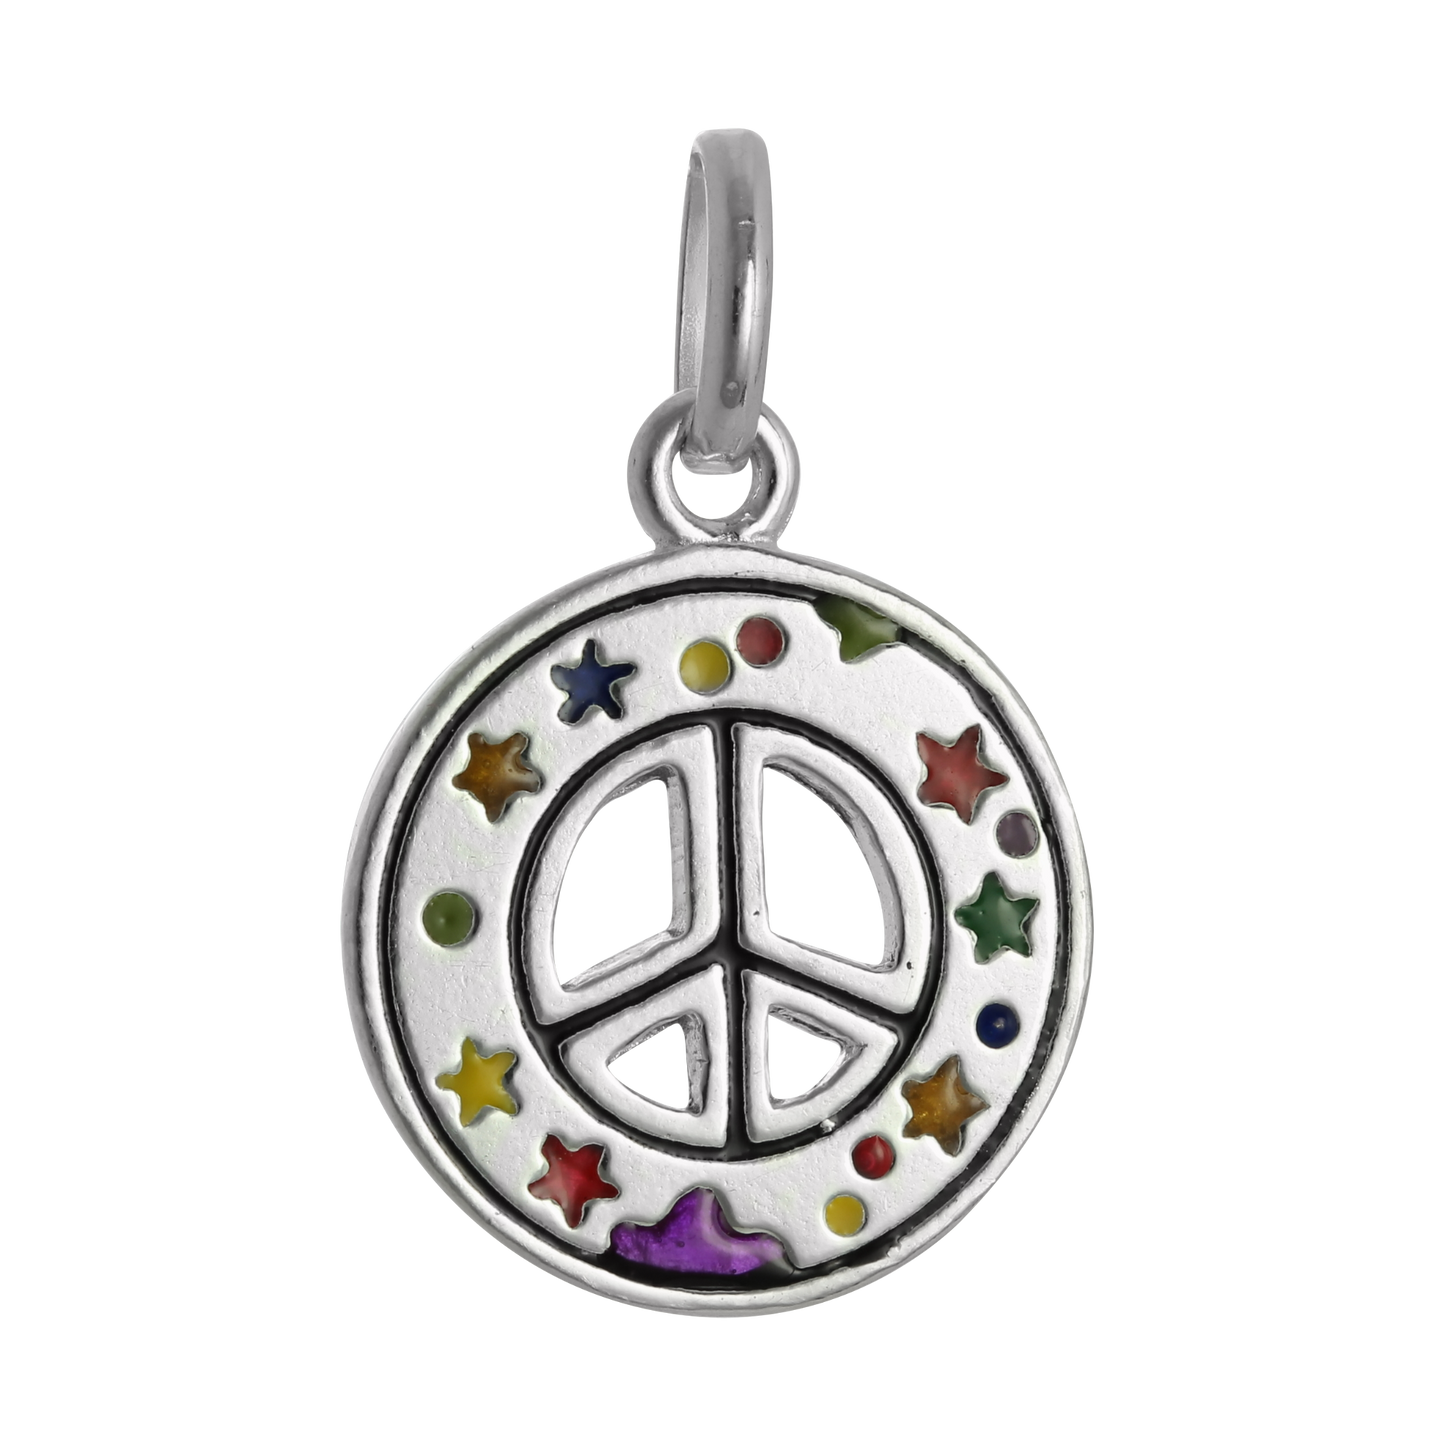 Sterling Silver & Enamel Peace Symbol Charm